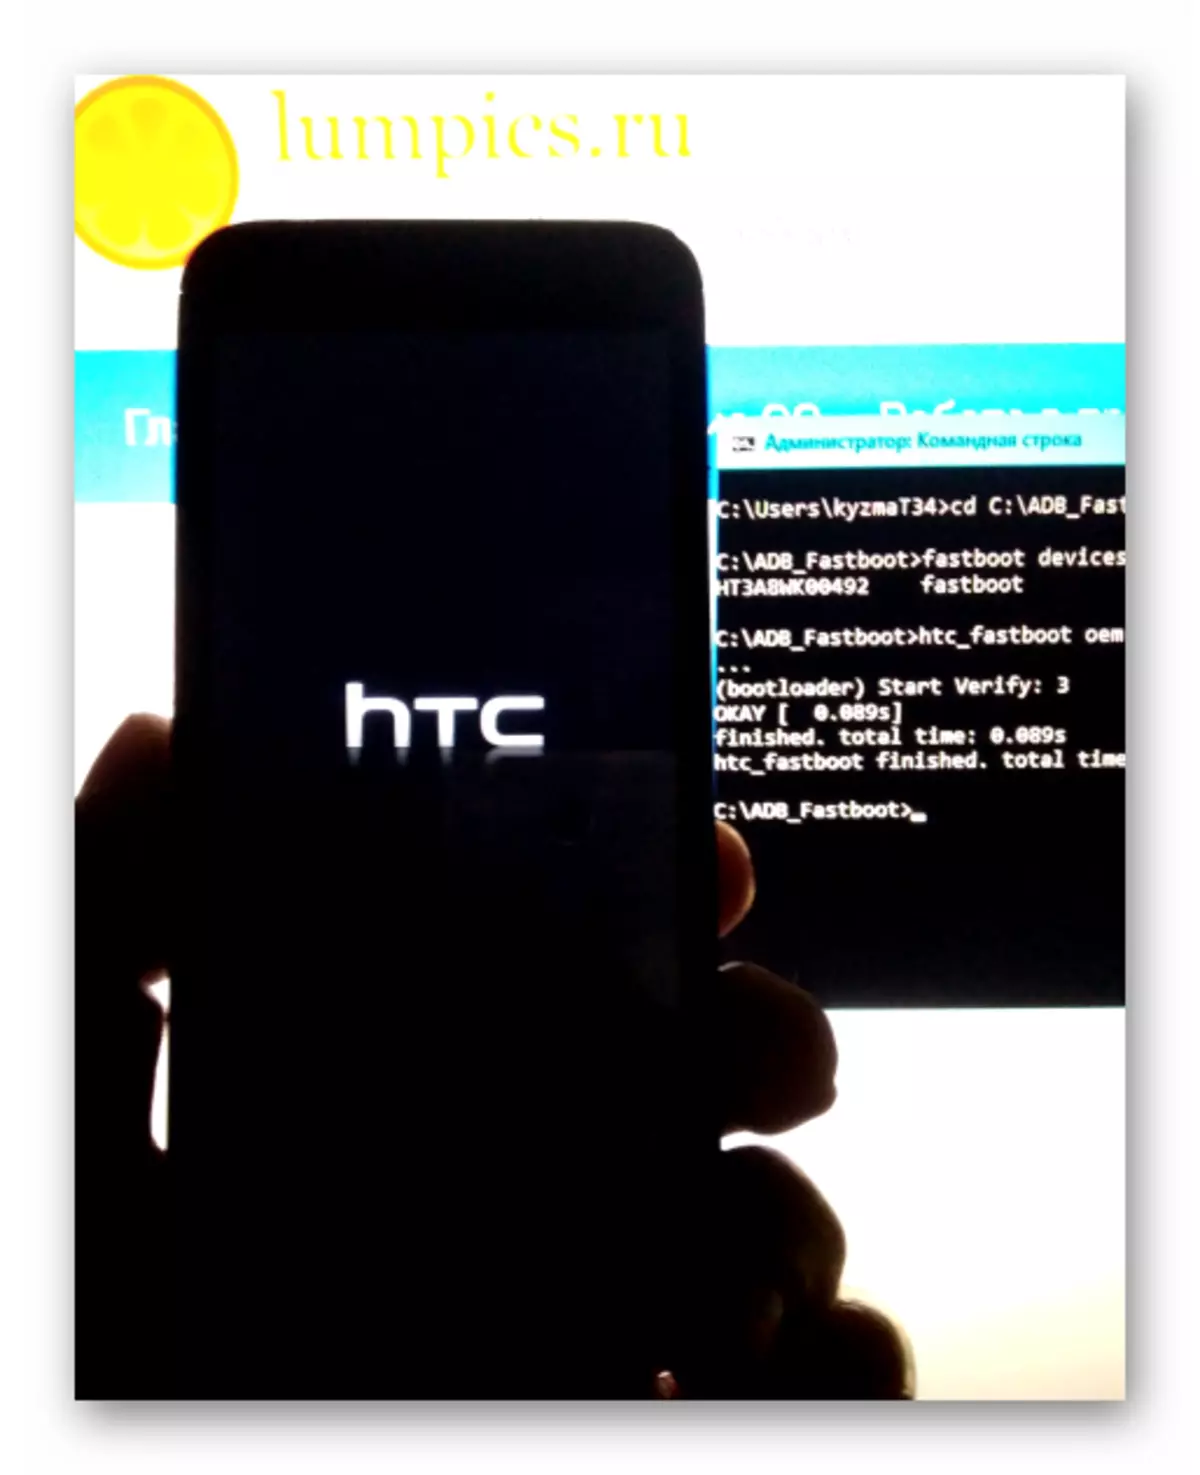 HTC Desire 601 firmware via fastboot - smartphone oversat til den ønskede tilstand - RUU